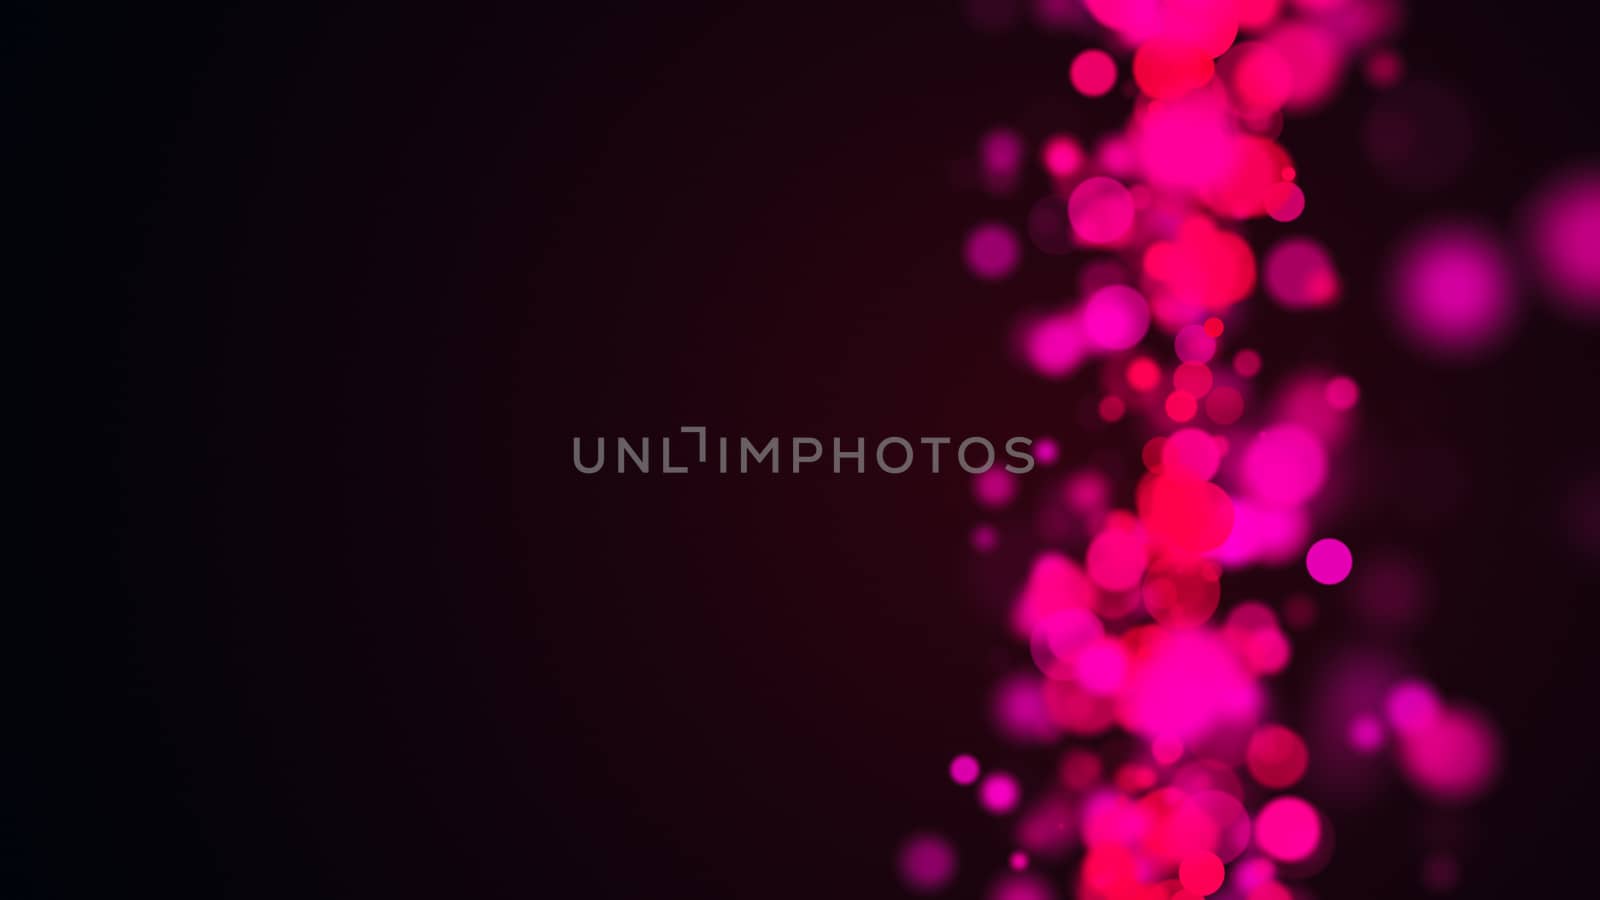 Abstract violet background. Digital illustration by nolimit046